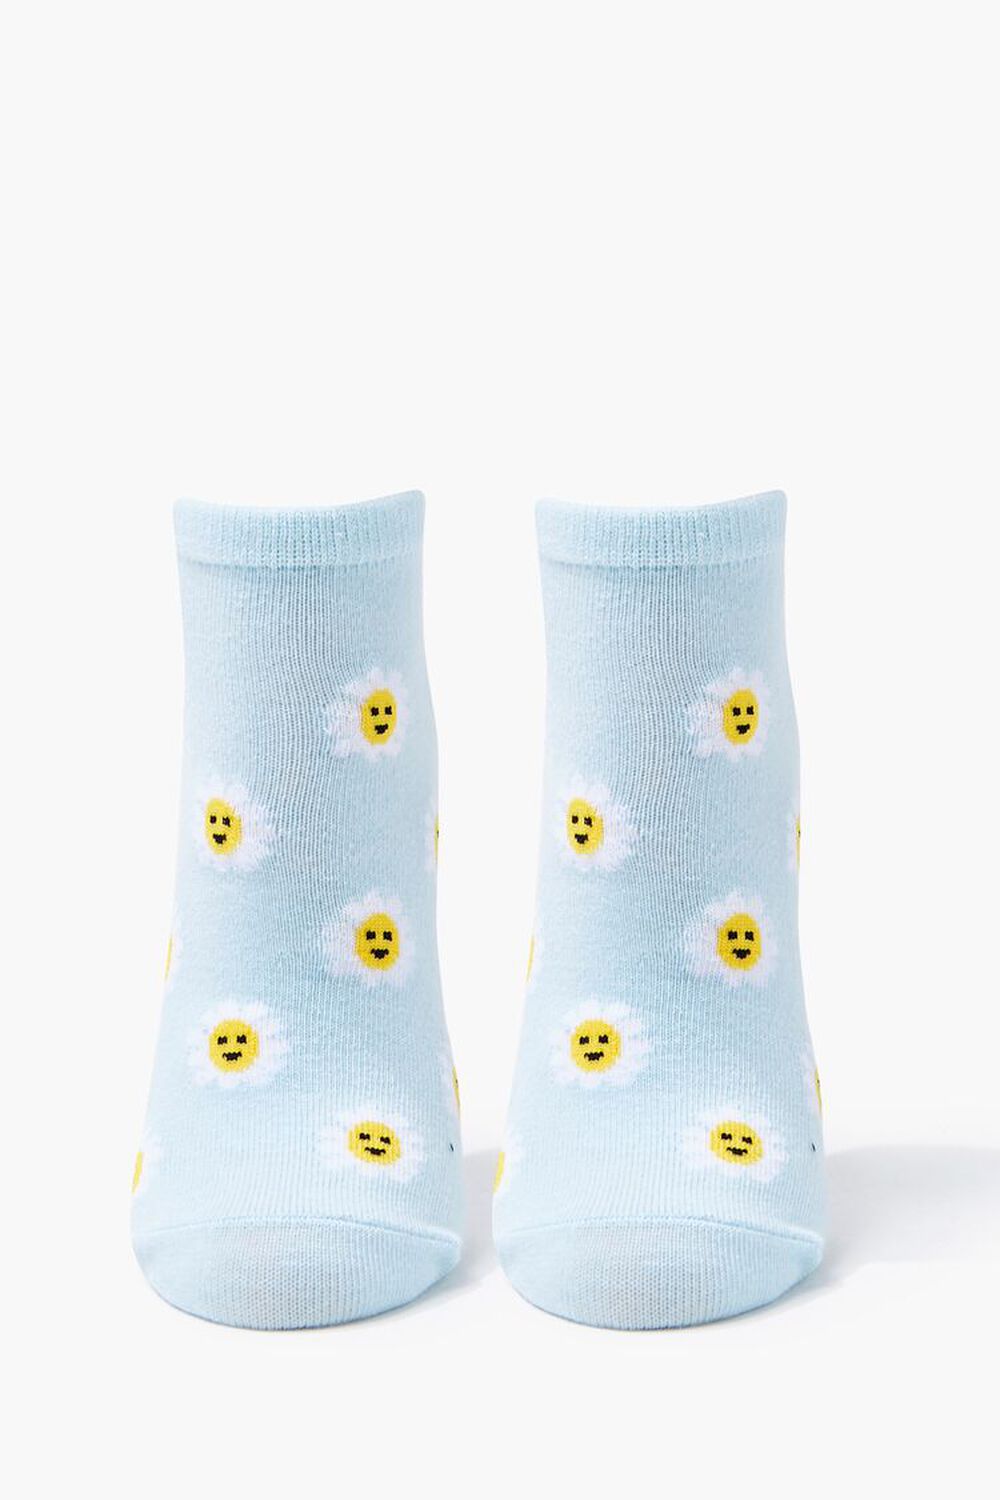 Daisy Print Ankle Socks, image 2